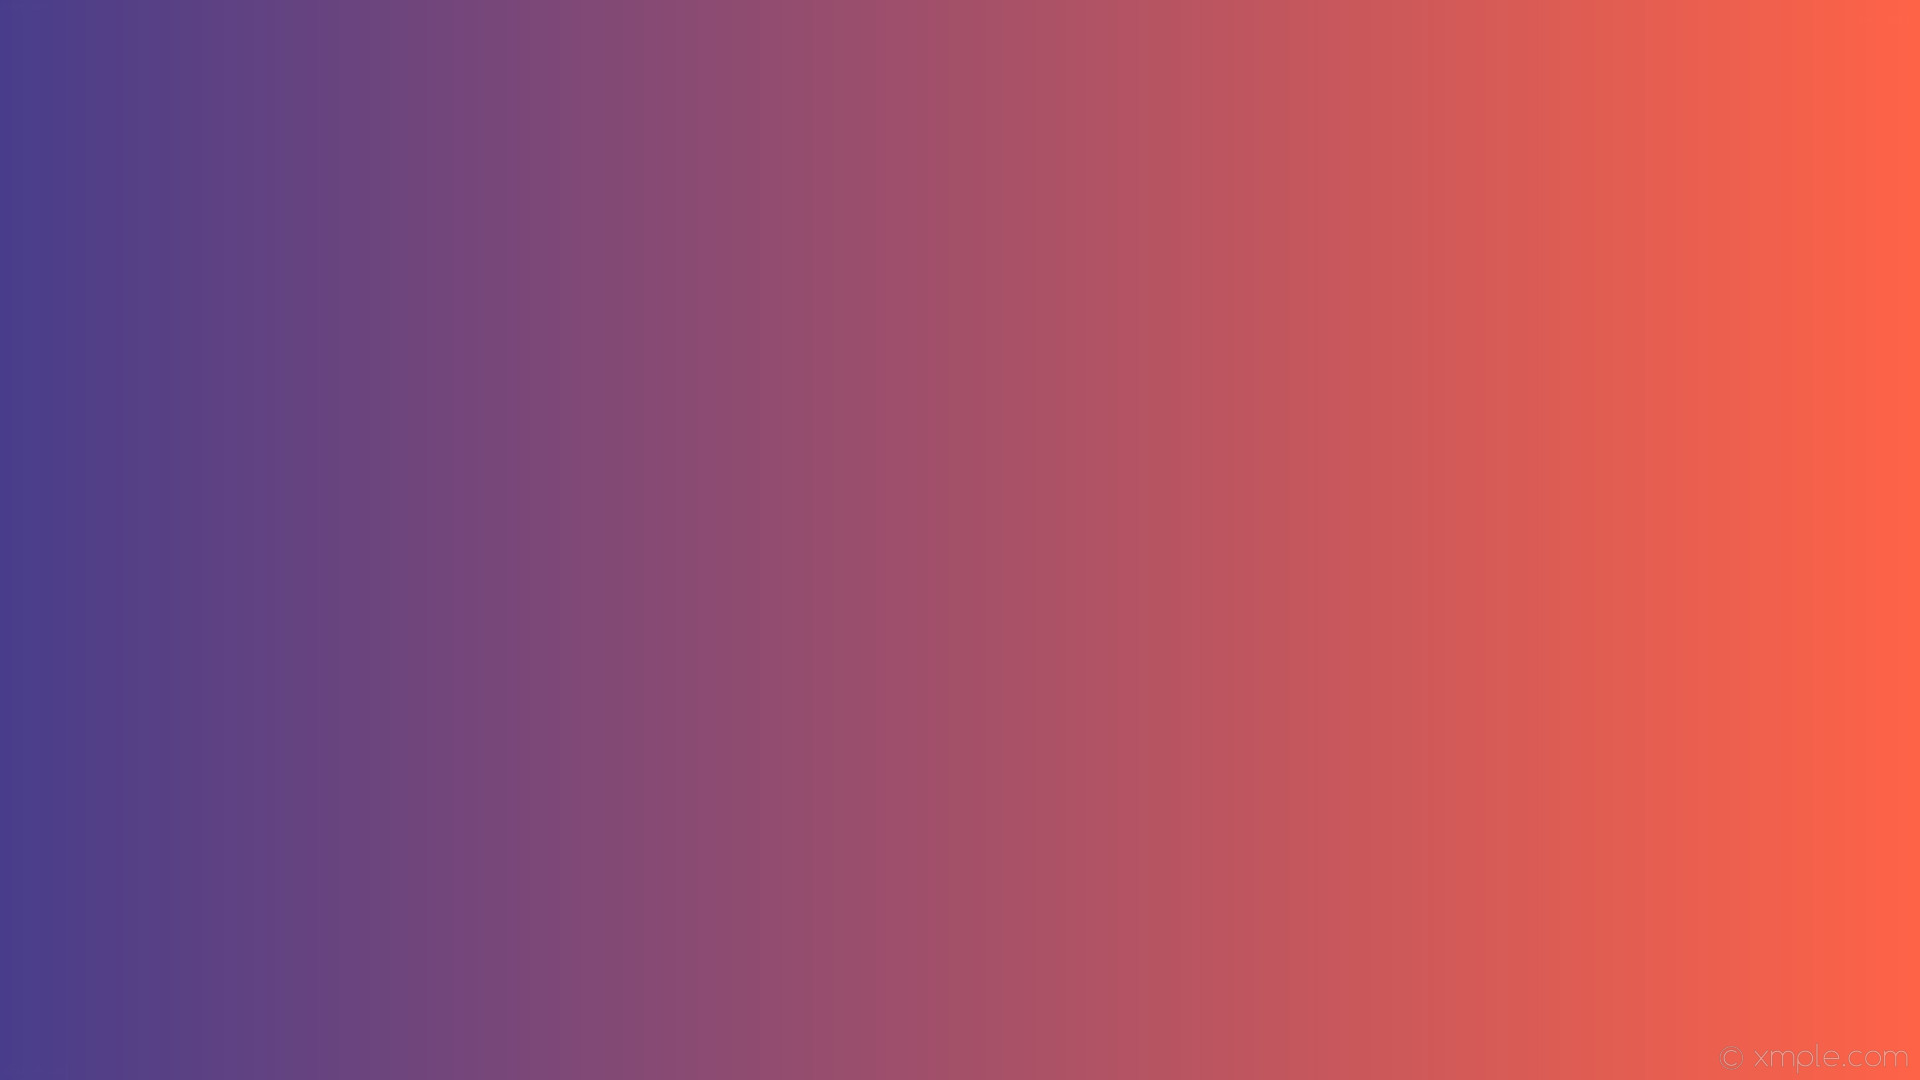 1920x1080 wallpaper linear gradient orange purple dark slate blue tomato #483d8b  #ff6347 180Â°